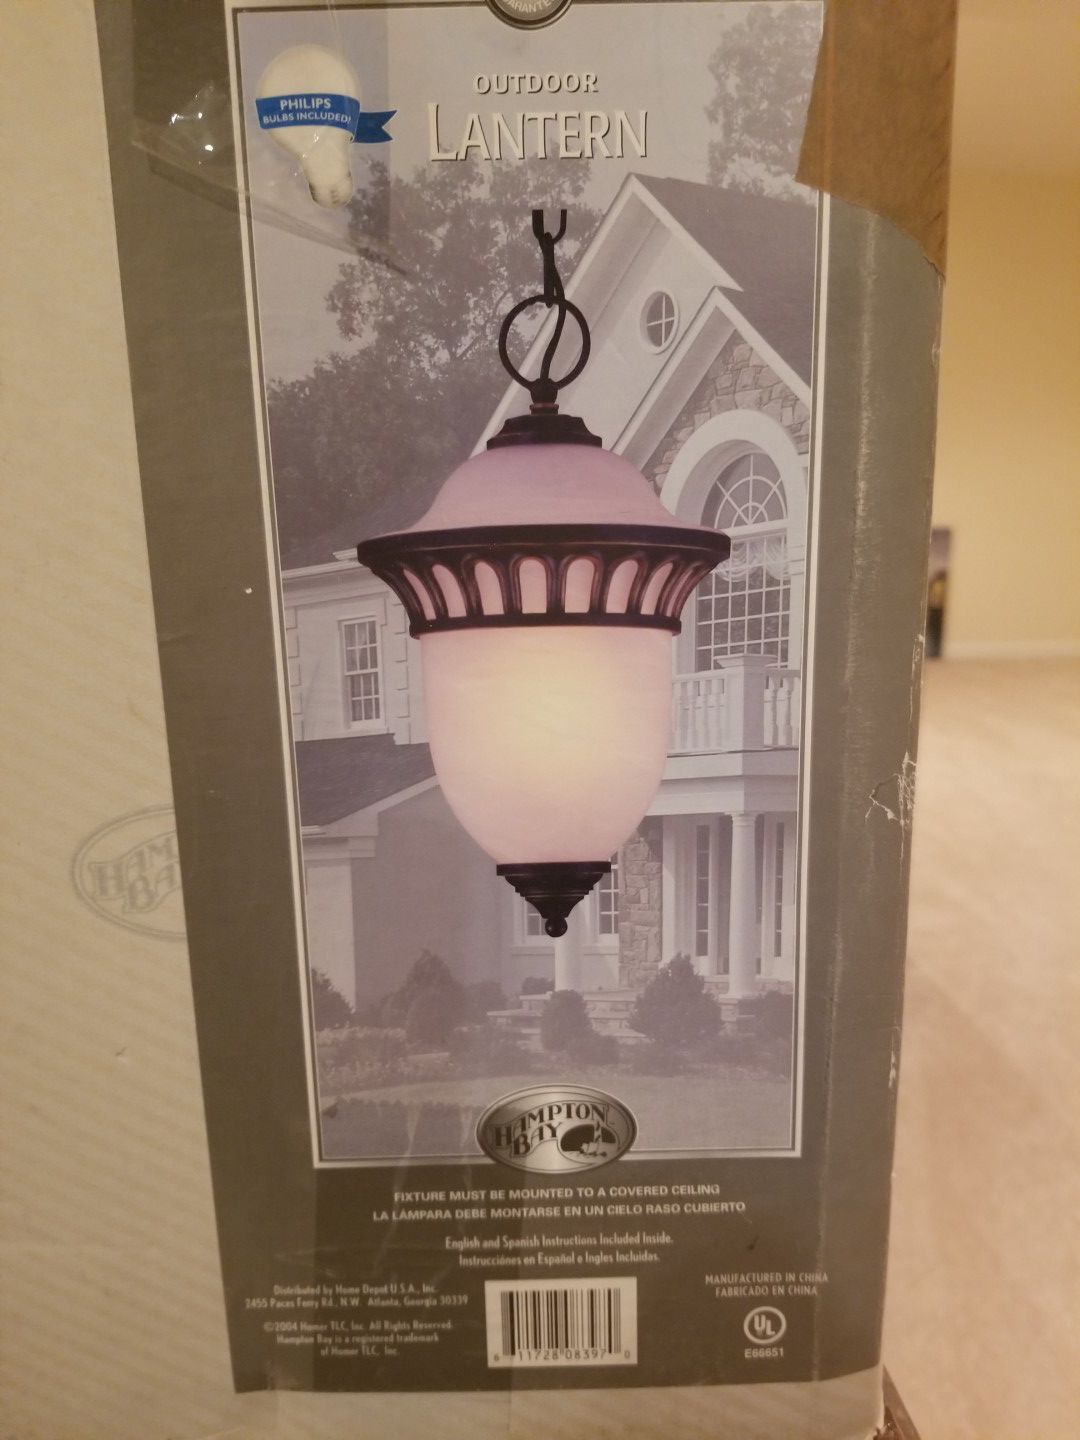 New Outdoor Lantern